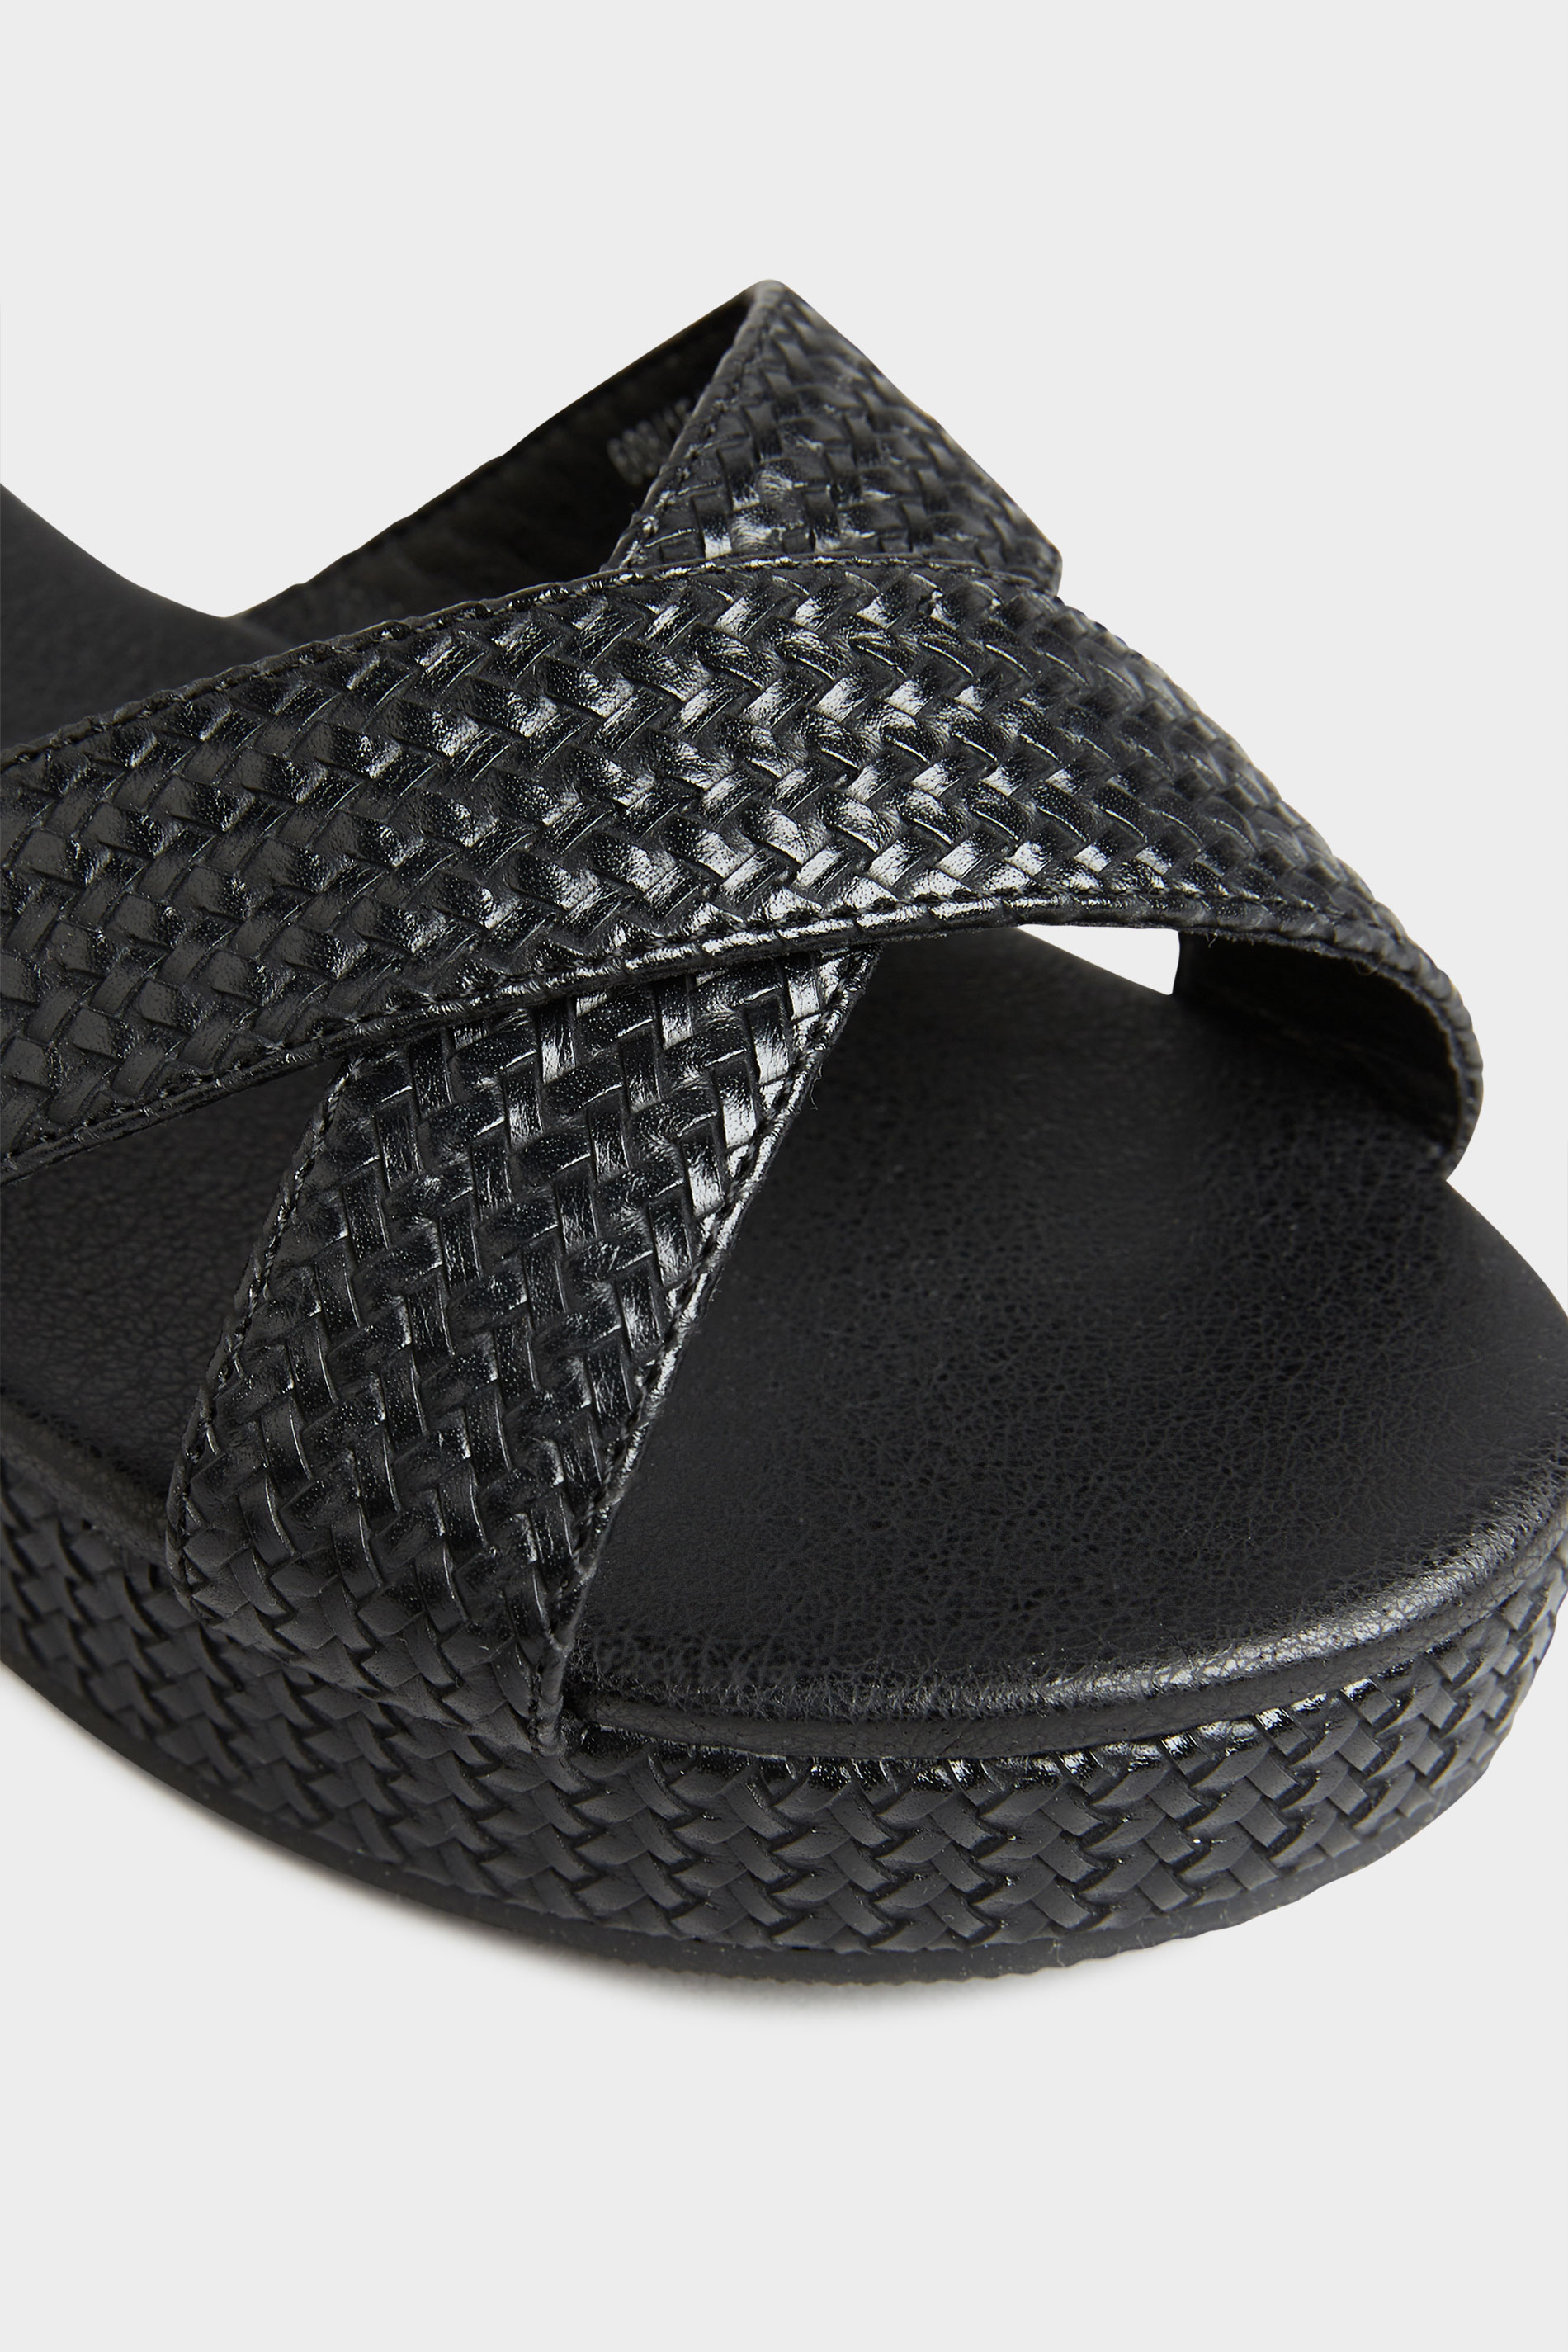 LIMITED COLLECTION Black Weave Platform Sandal In Extra Wide Fit | Long ...